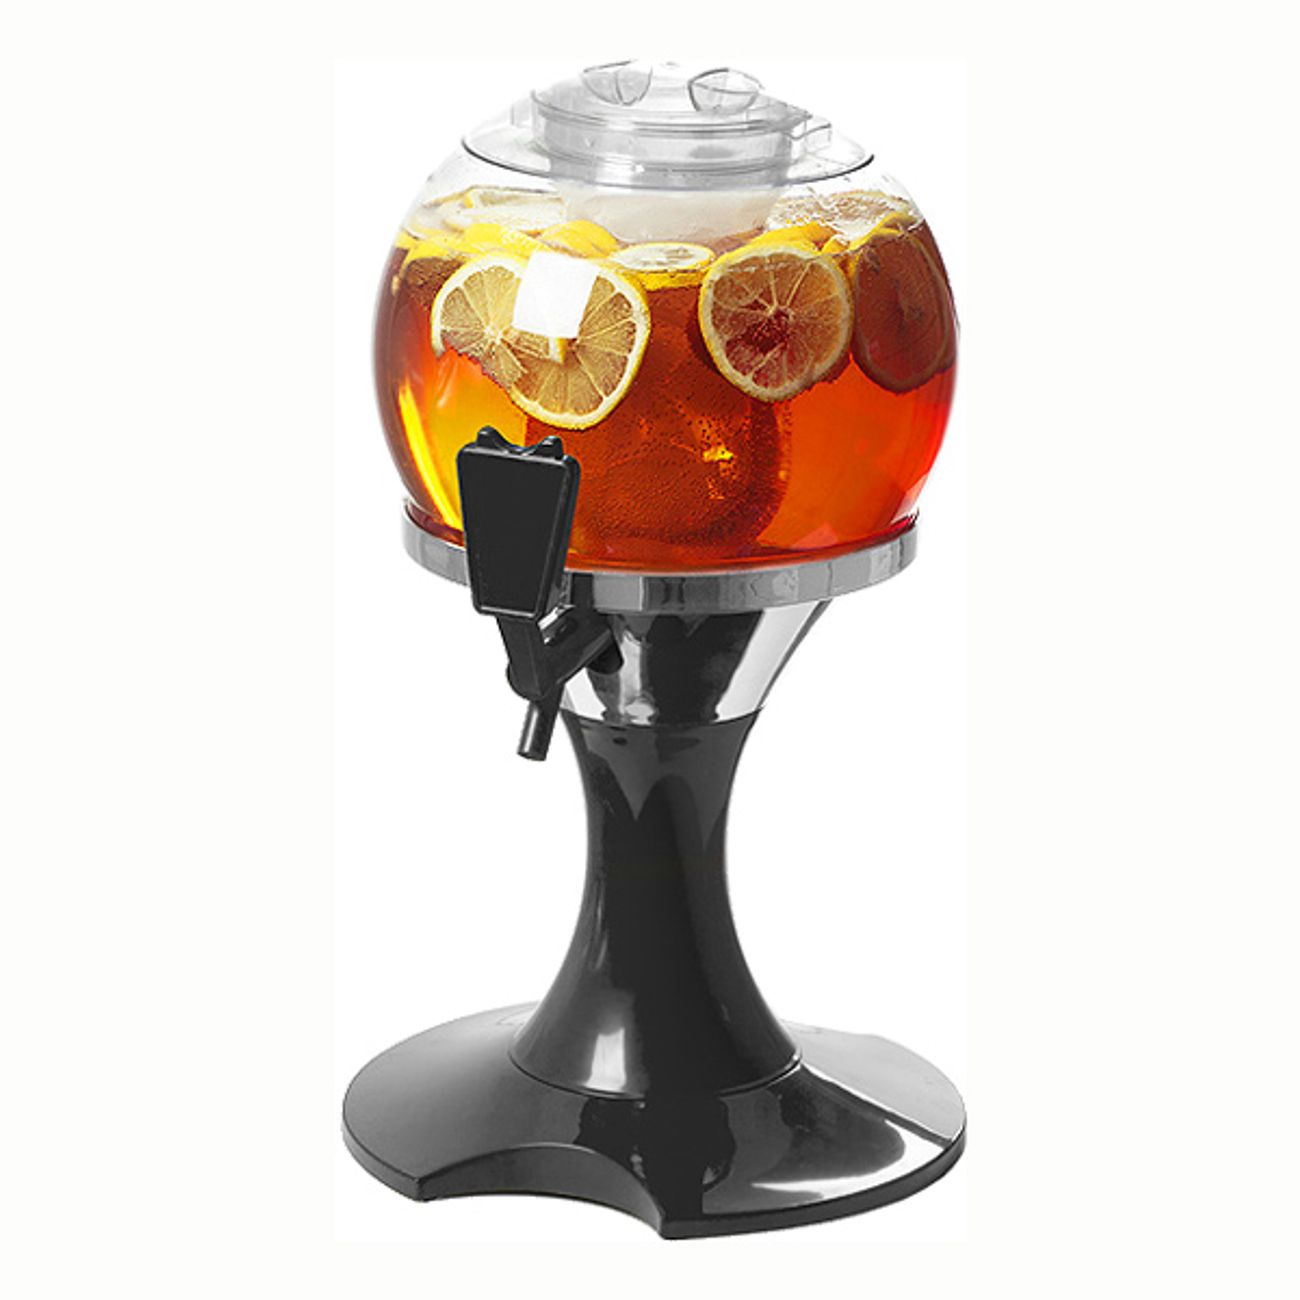 ice-orb-drinkdispenser-1